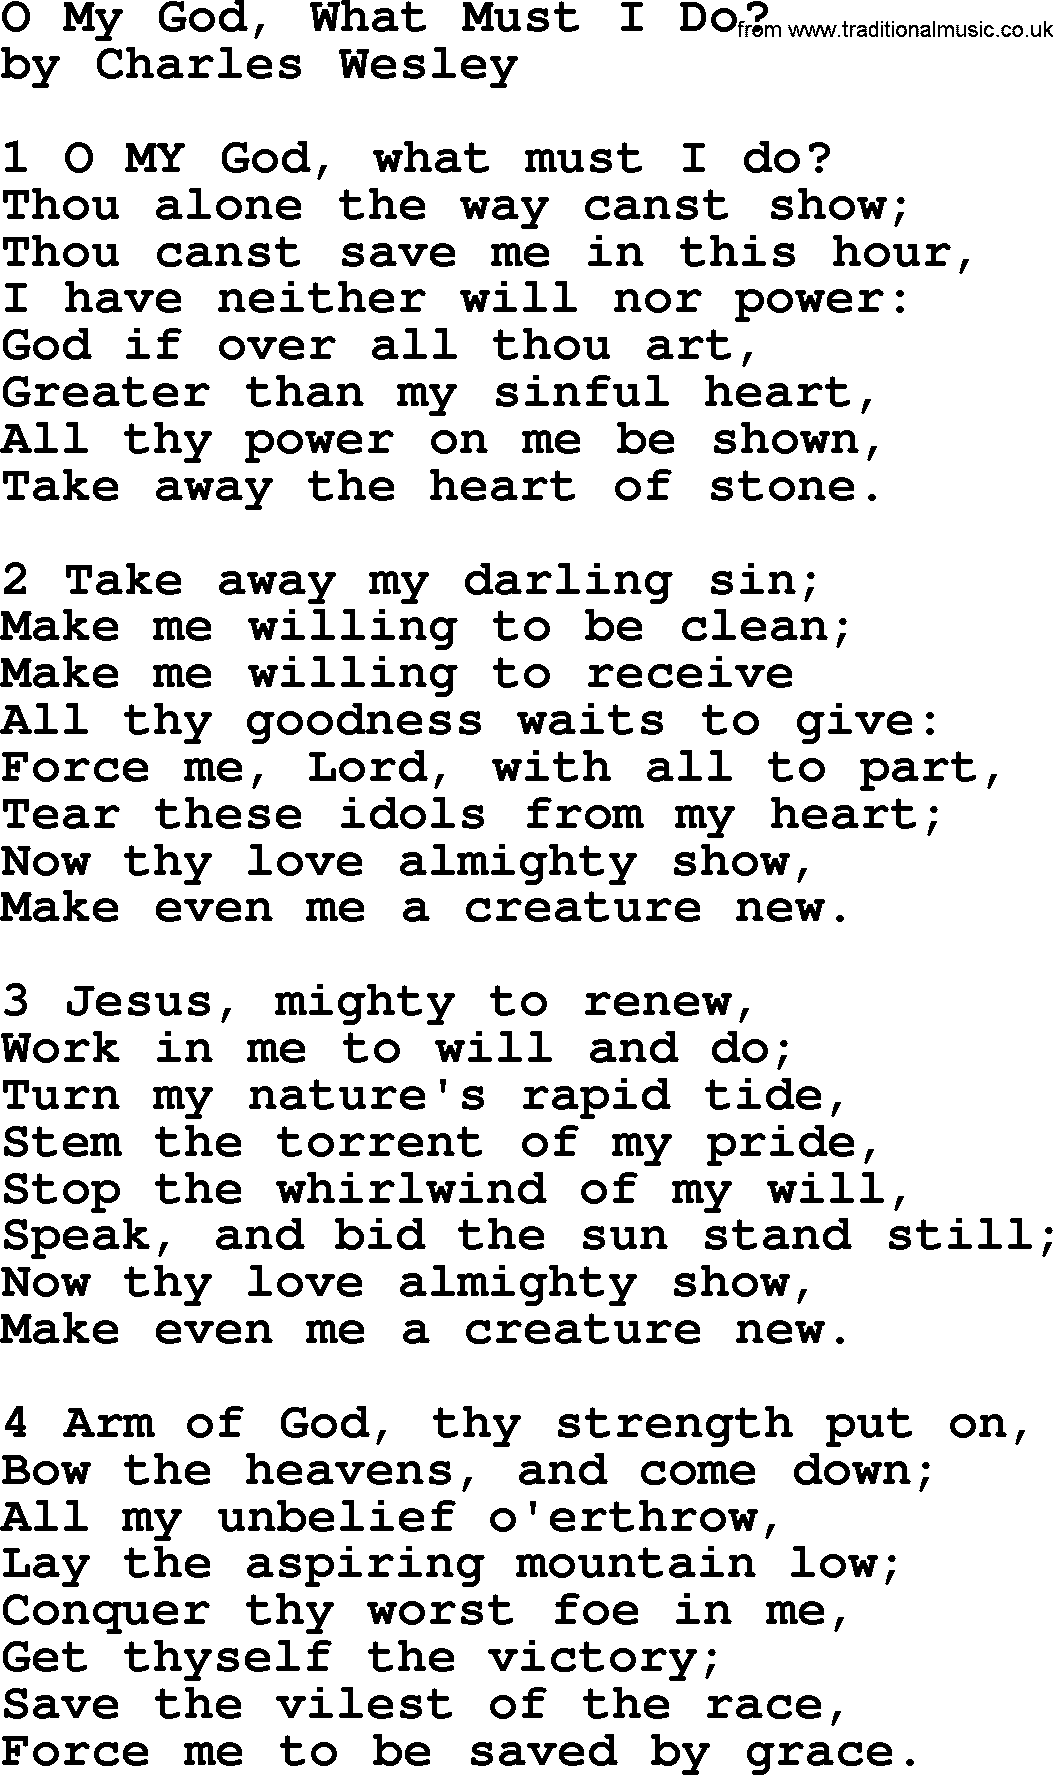 Charles Wesley hymn: O My God, What Must I Do_, lyrics